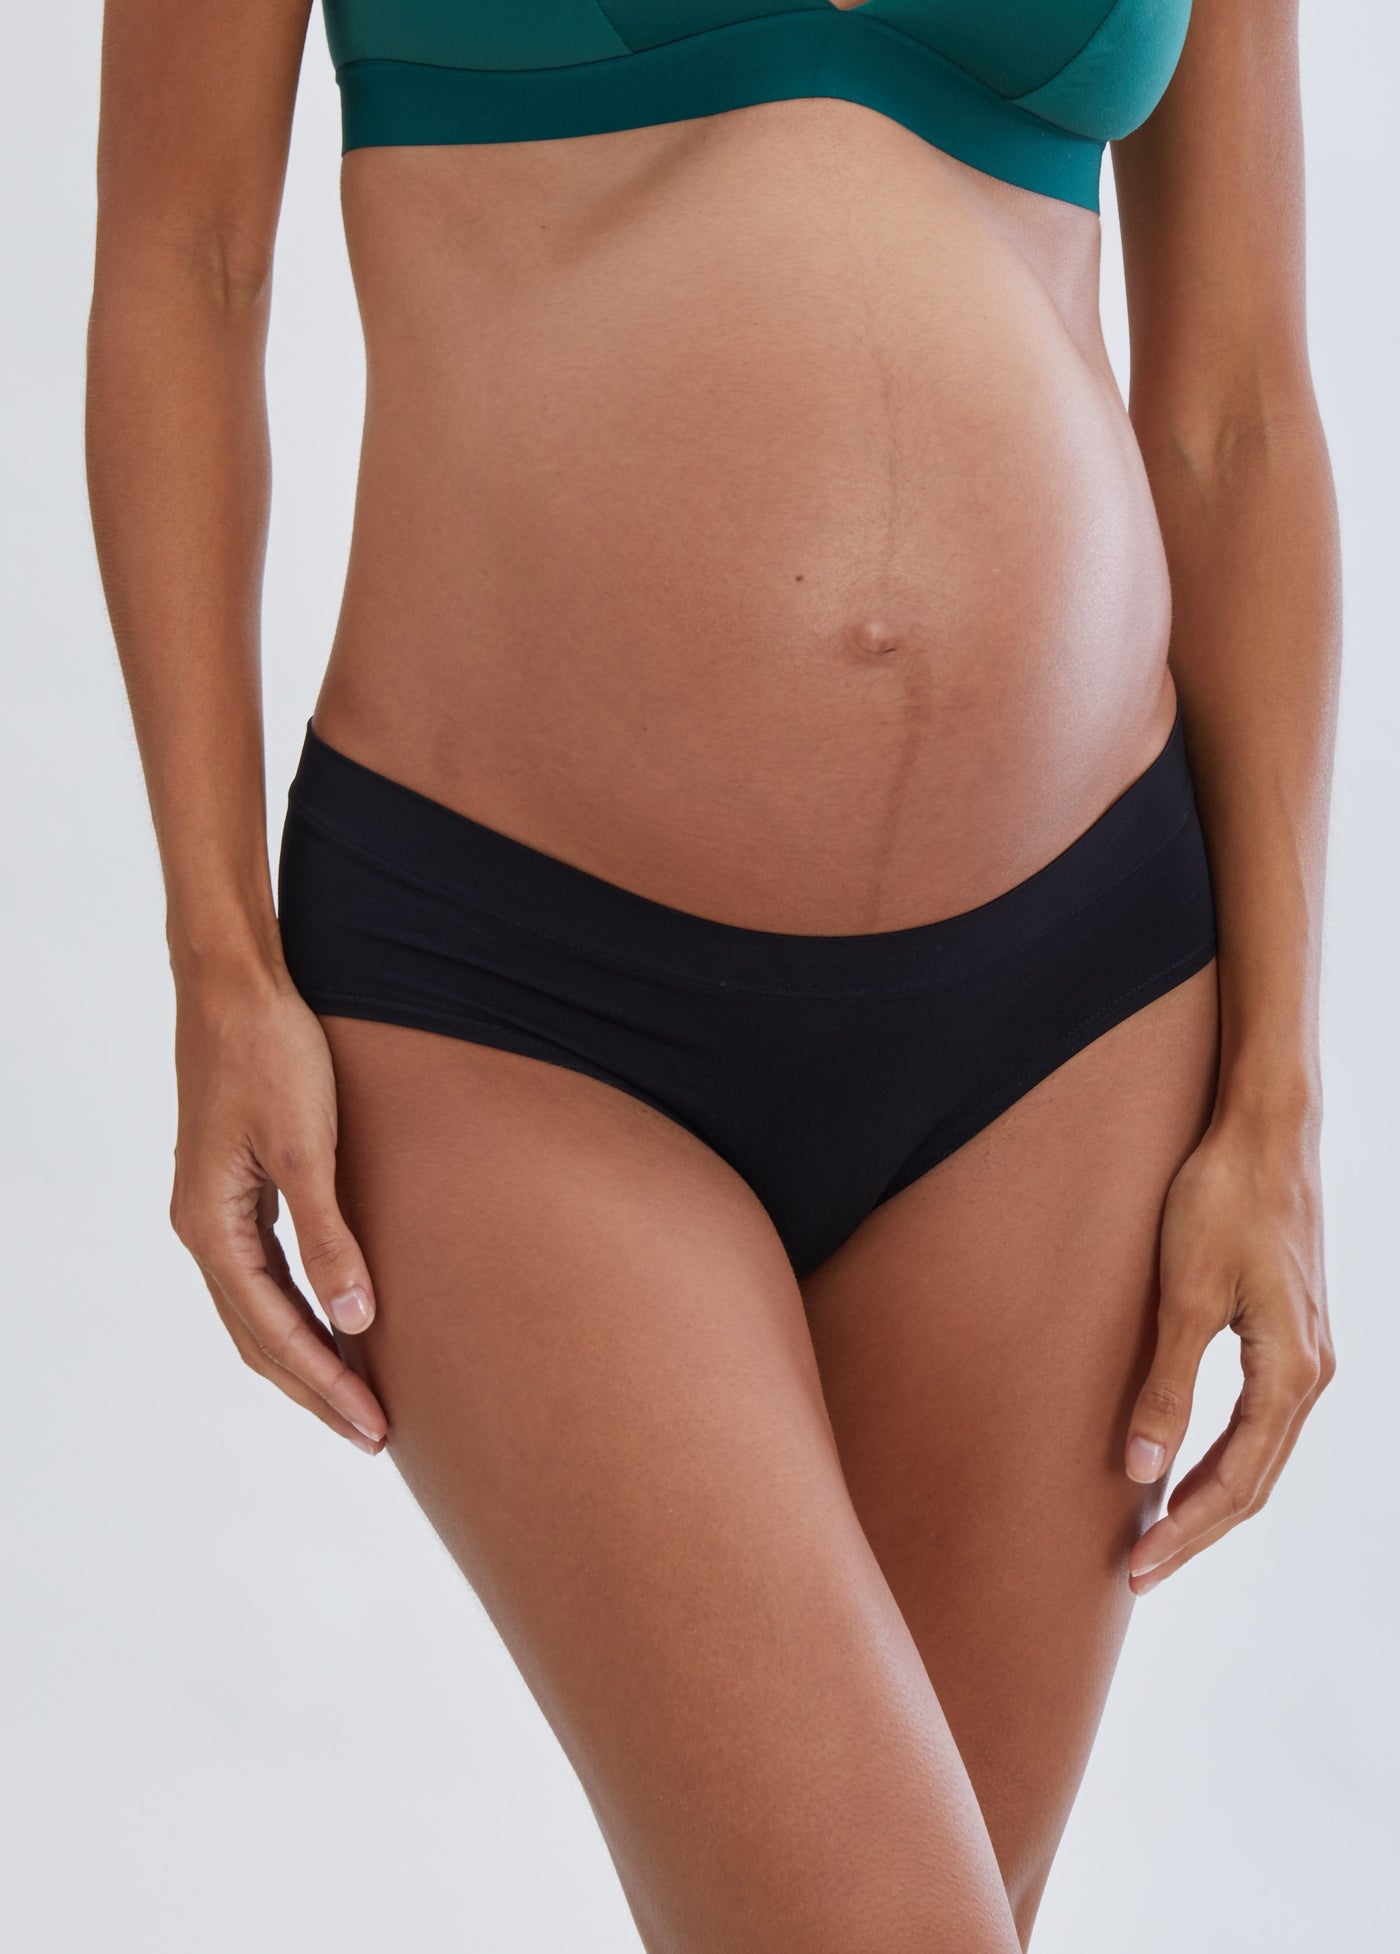 YDKZYMD 100% Cotton Underwear for Women Briefs Low Waist Stretchy Maternity  Pregnancy Moisture Wicking Bikini Panties 3 Pack Complexion 